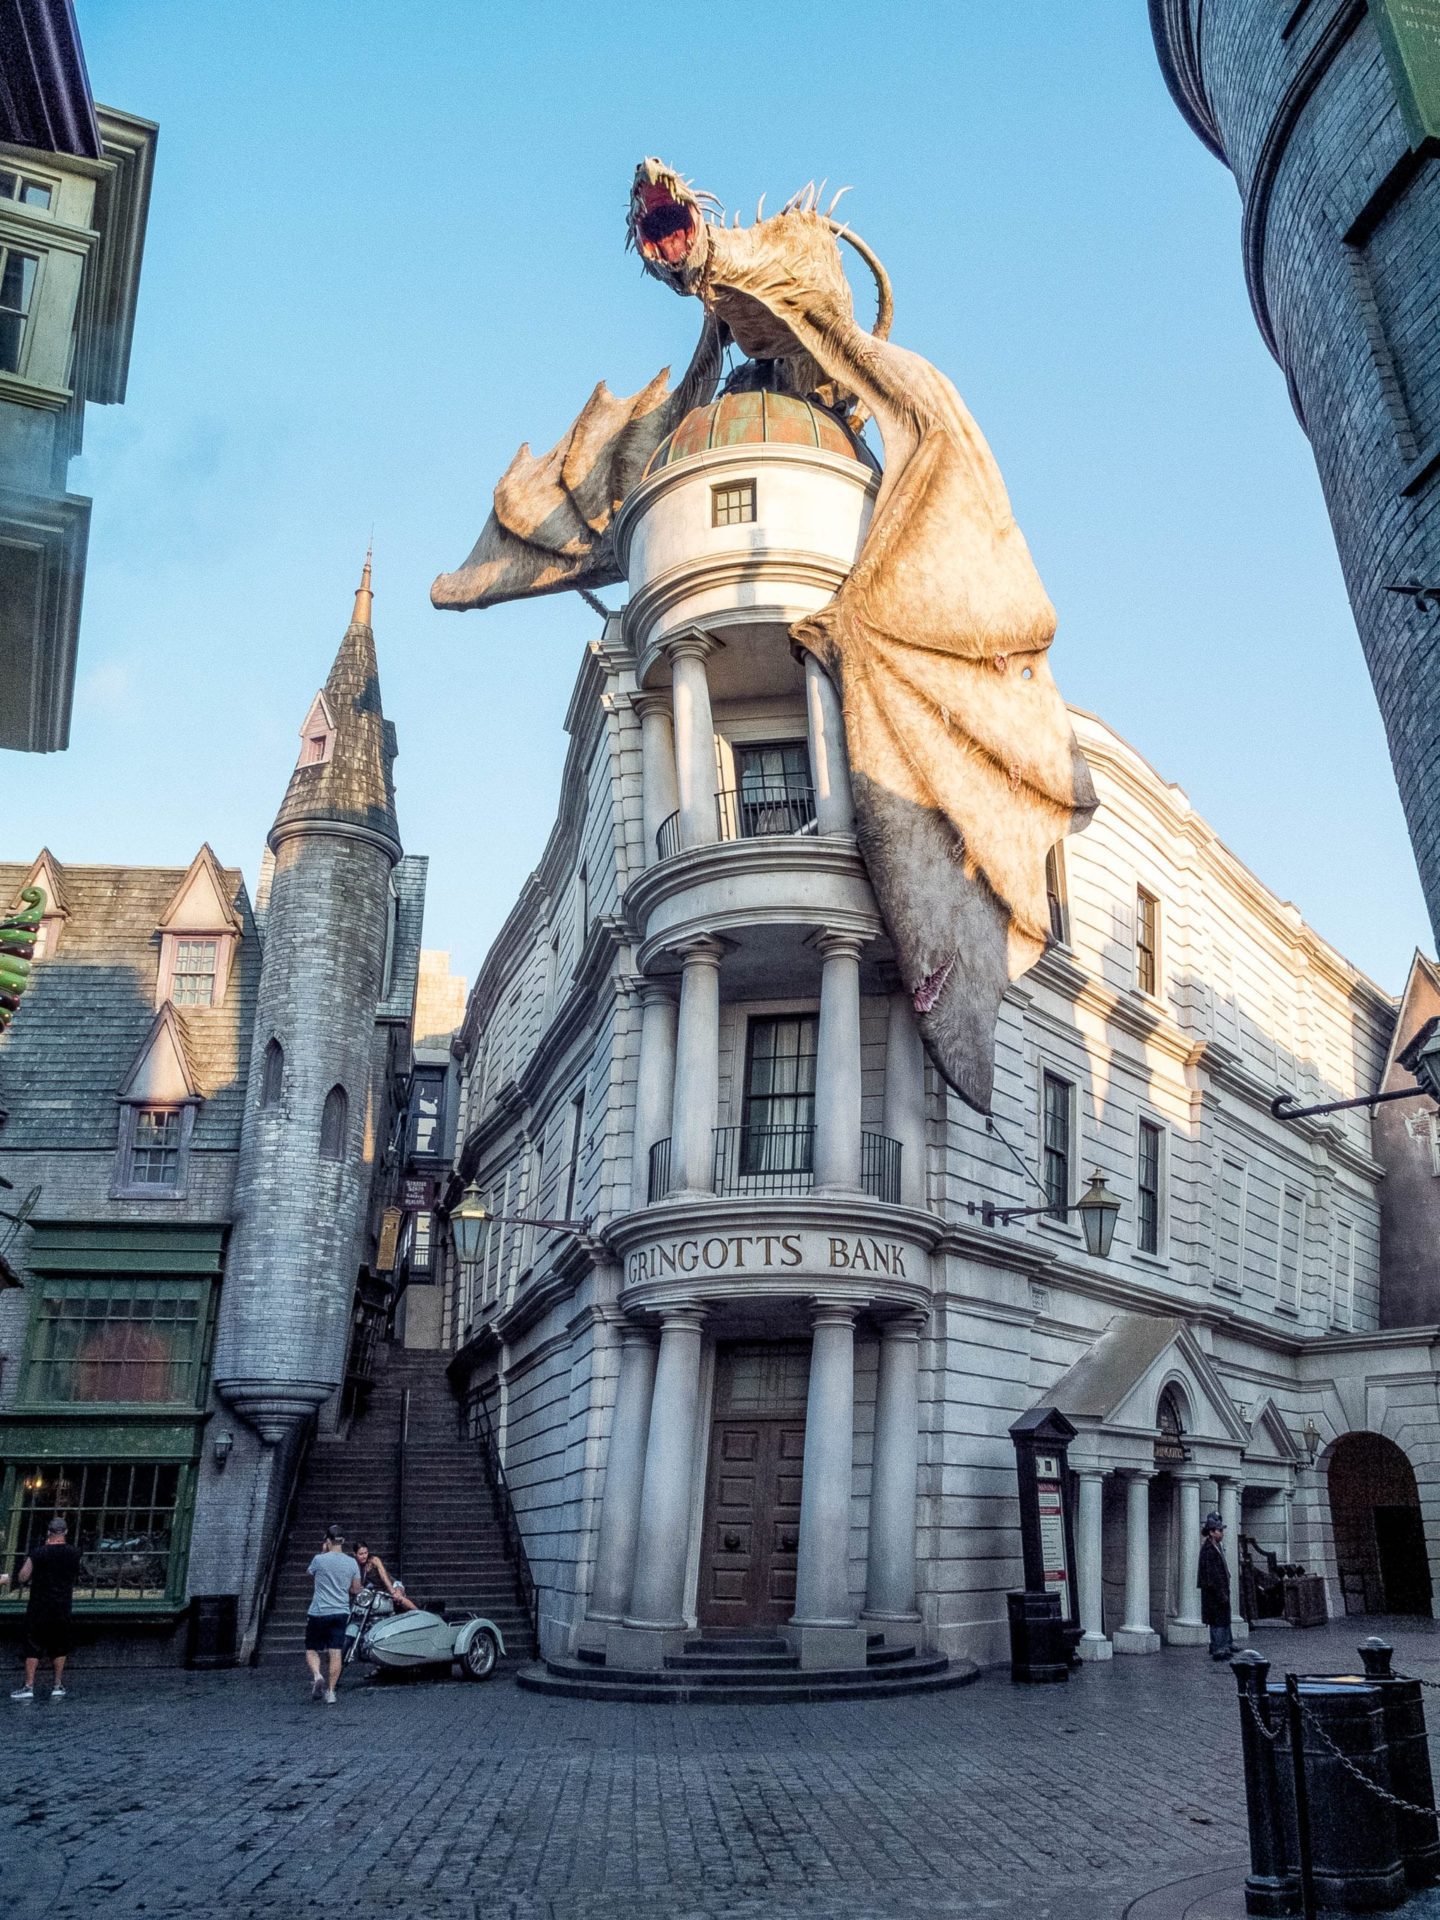 Universal Studios Gringotts Bank, the Wizarding World of Harry Potter